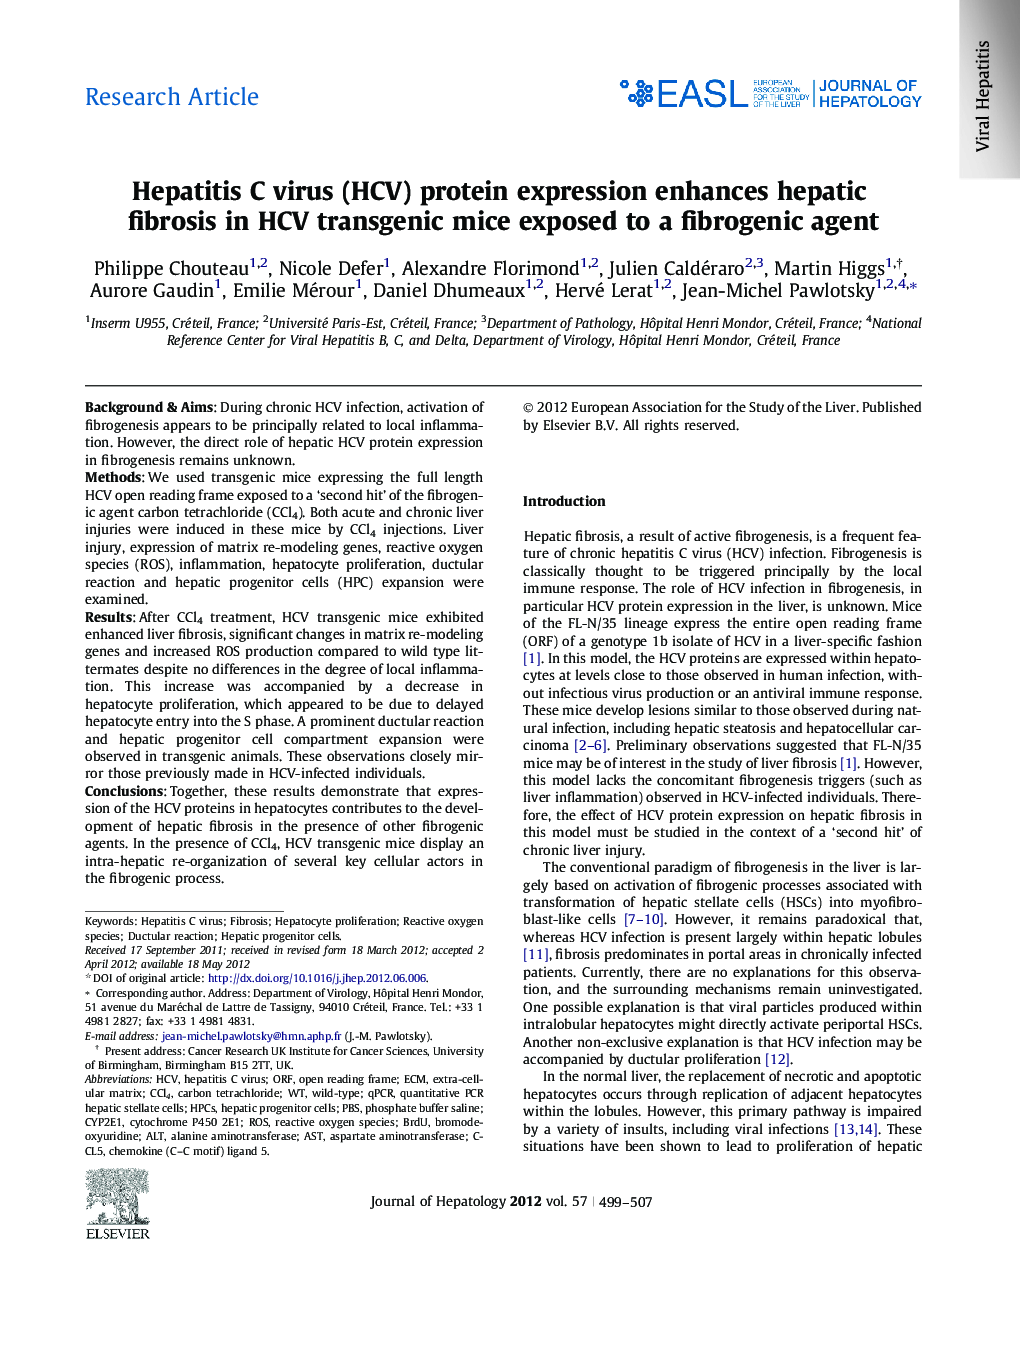 Research ArticleHepatitis C virus (HCV) protein expression enhances hepatic fibrosis in HCV transgenic mice exposed to a fibrogenic agent